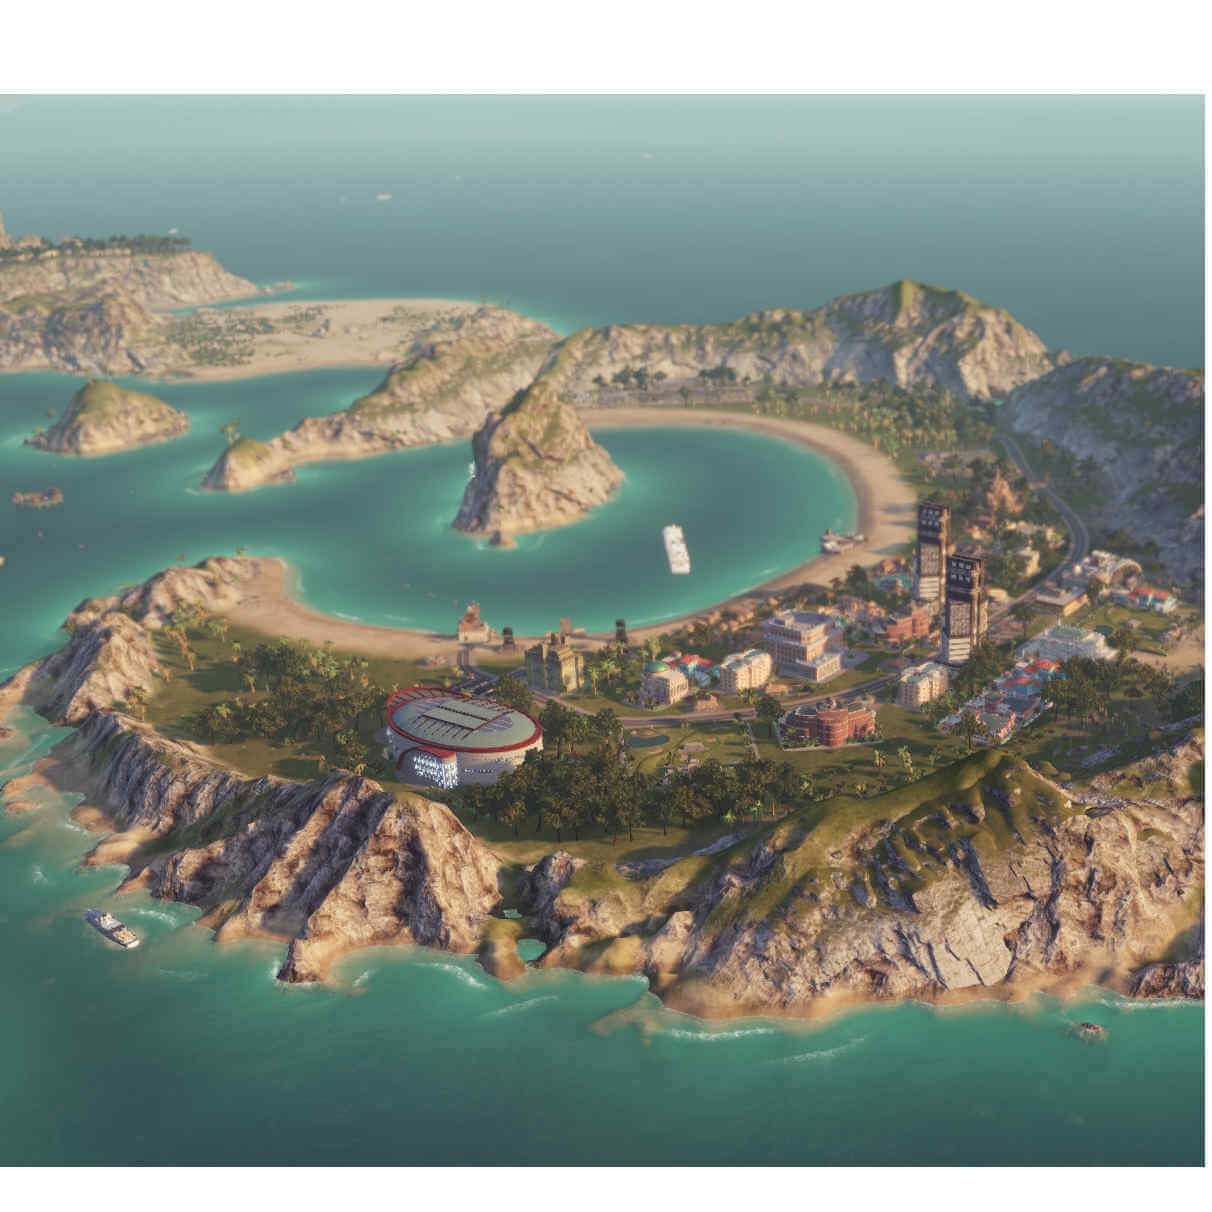 fix Tropico 6 game issues